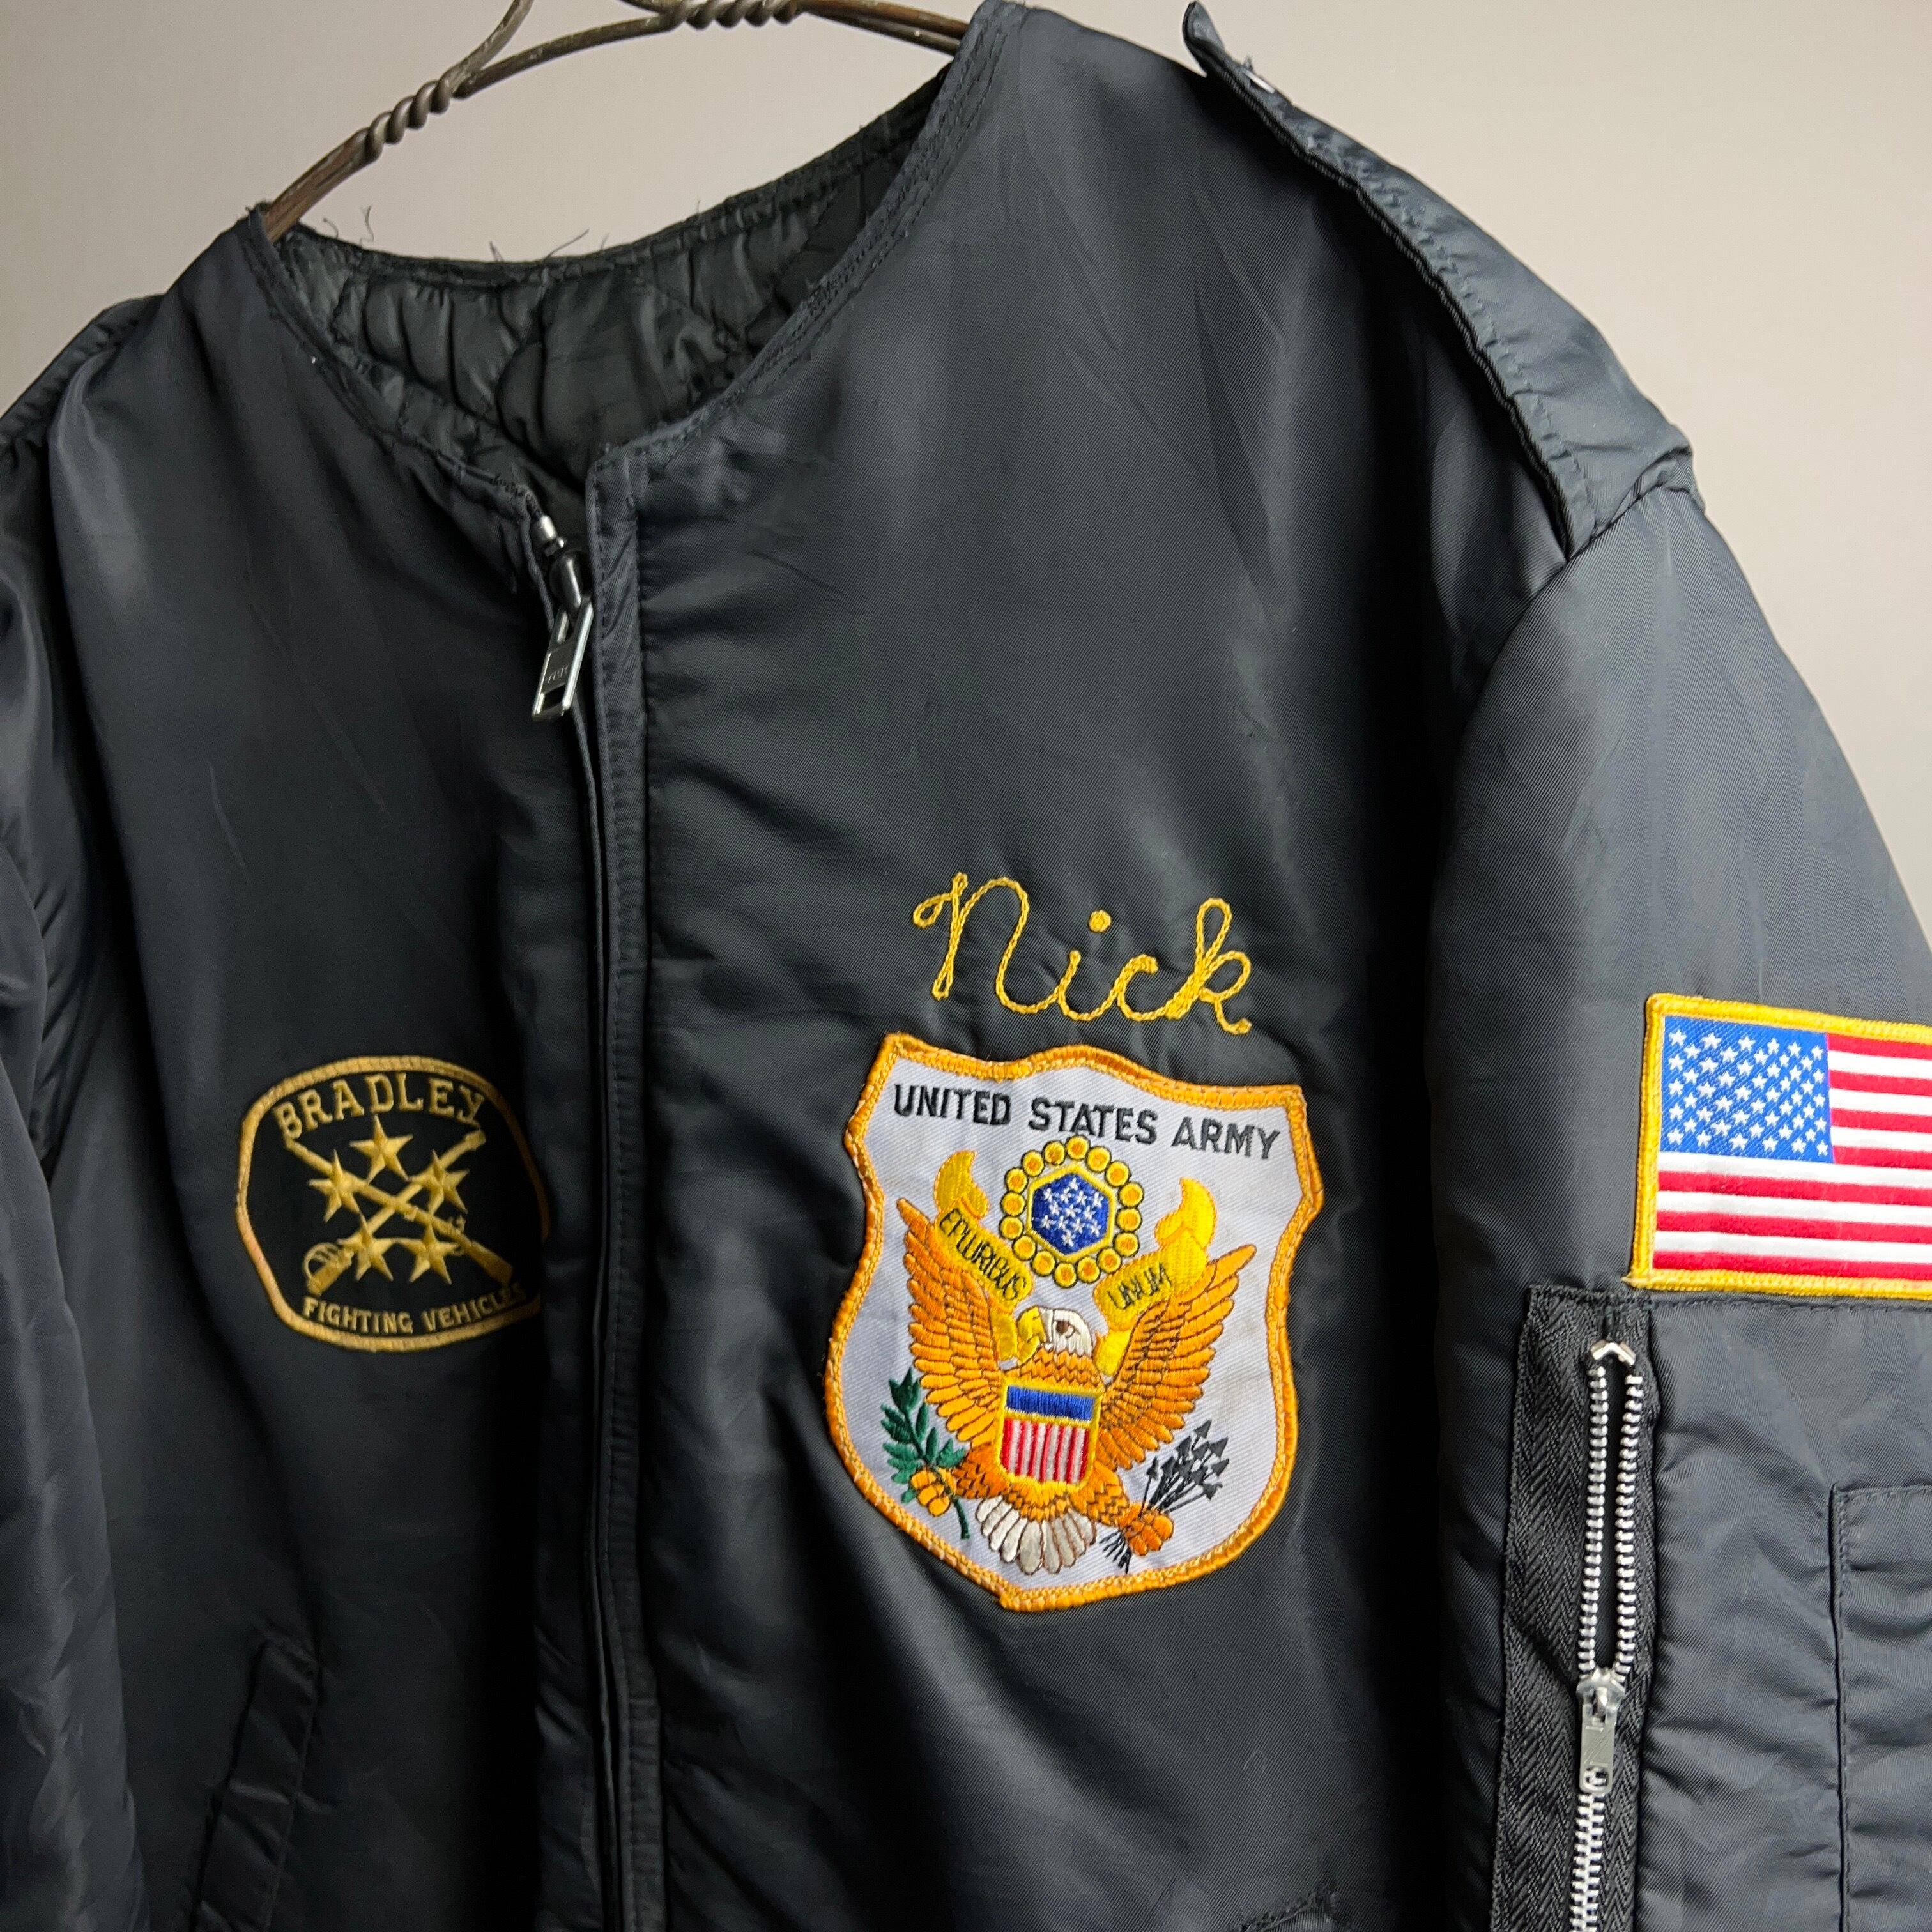 00s TATA archive MA-1 flight jacket